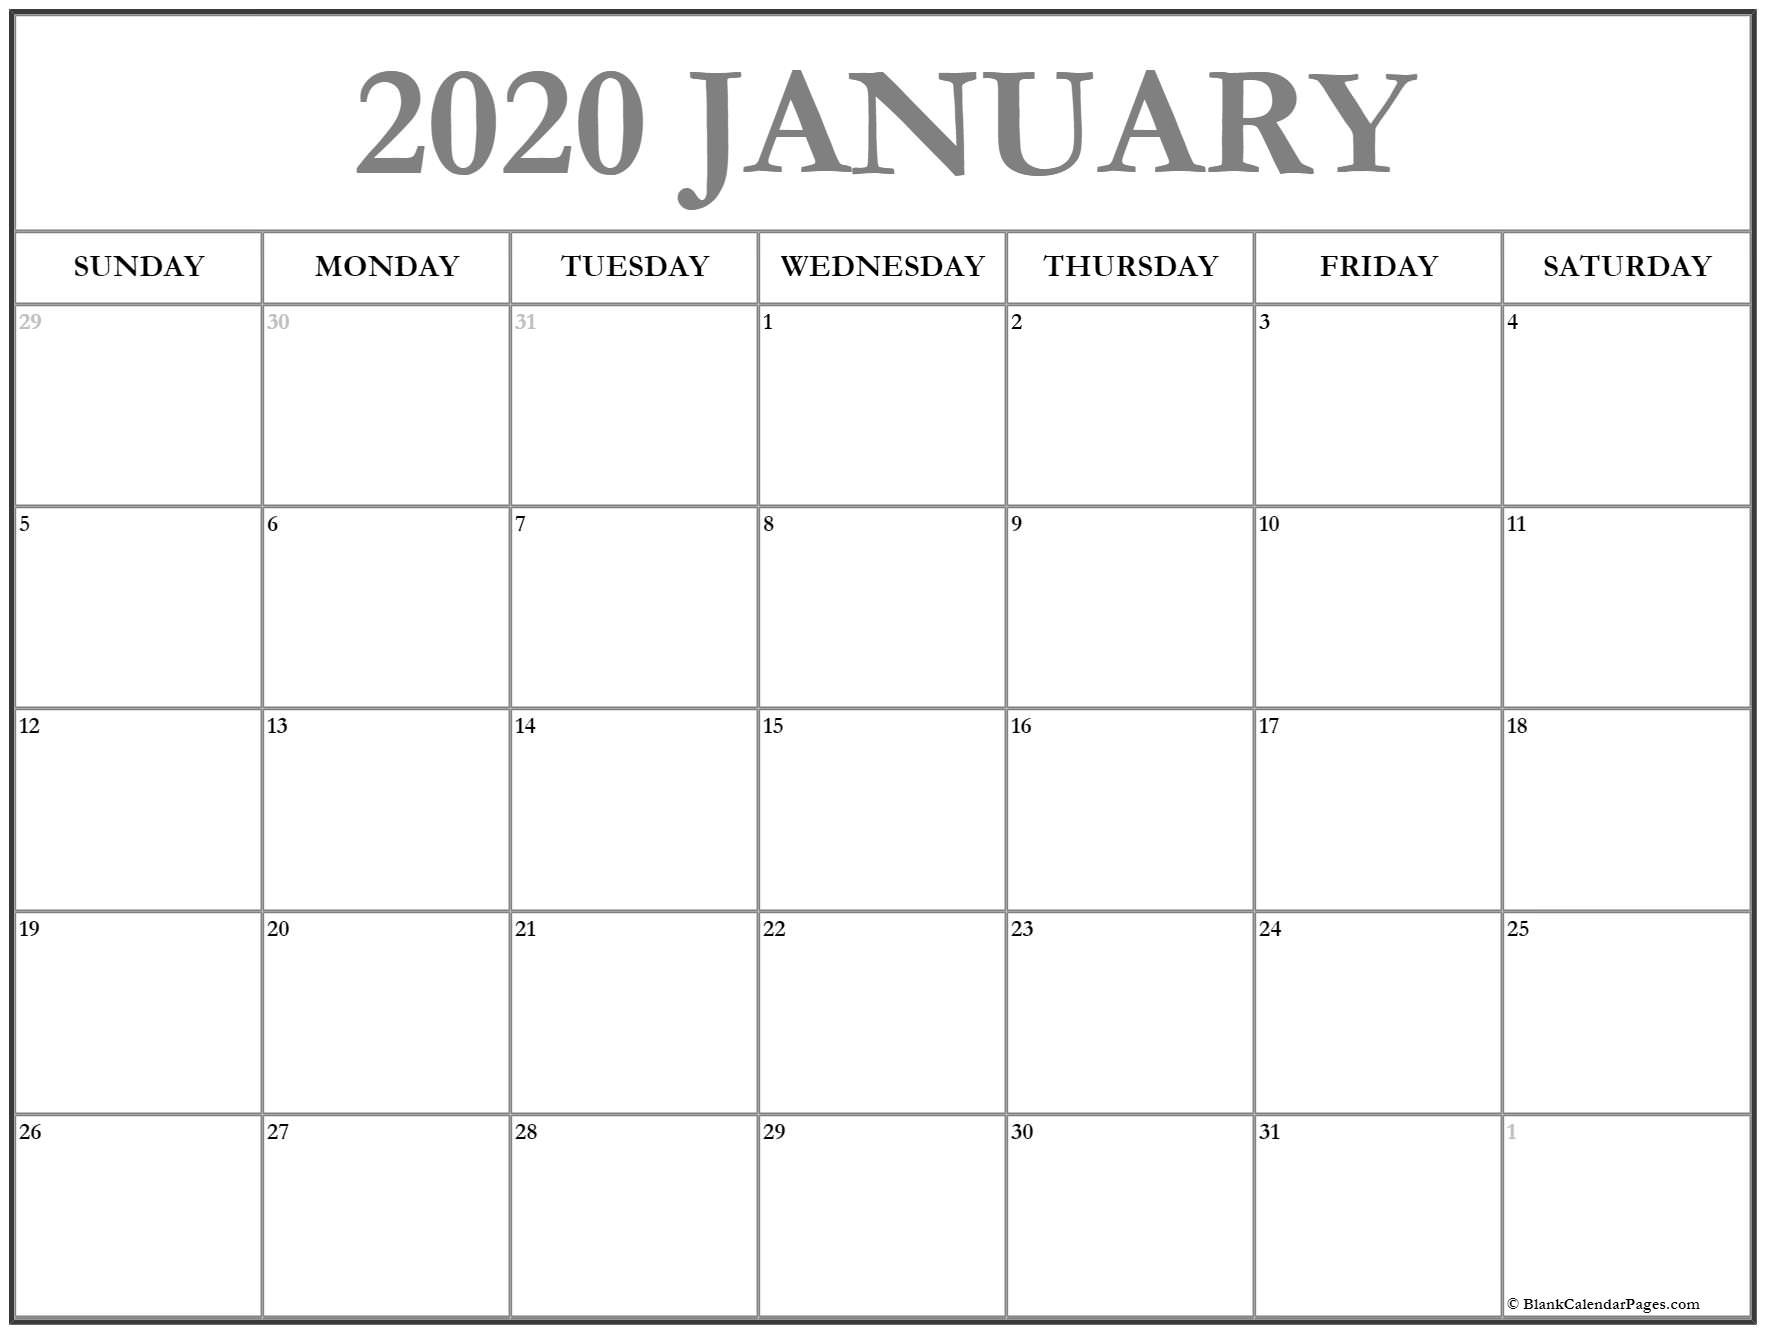 January 2020 Calendar | Free Printable Monthly Calendars-January 2020 Calendar Canada